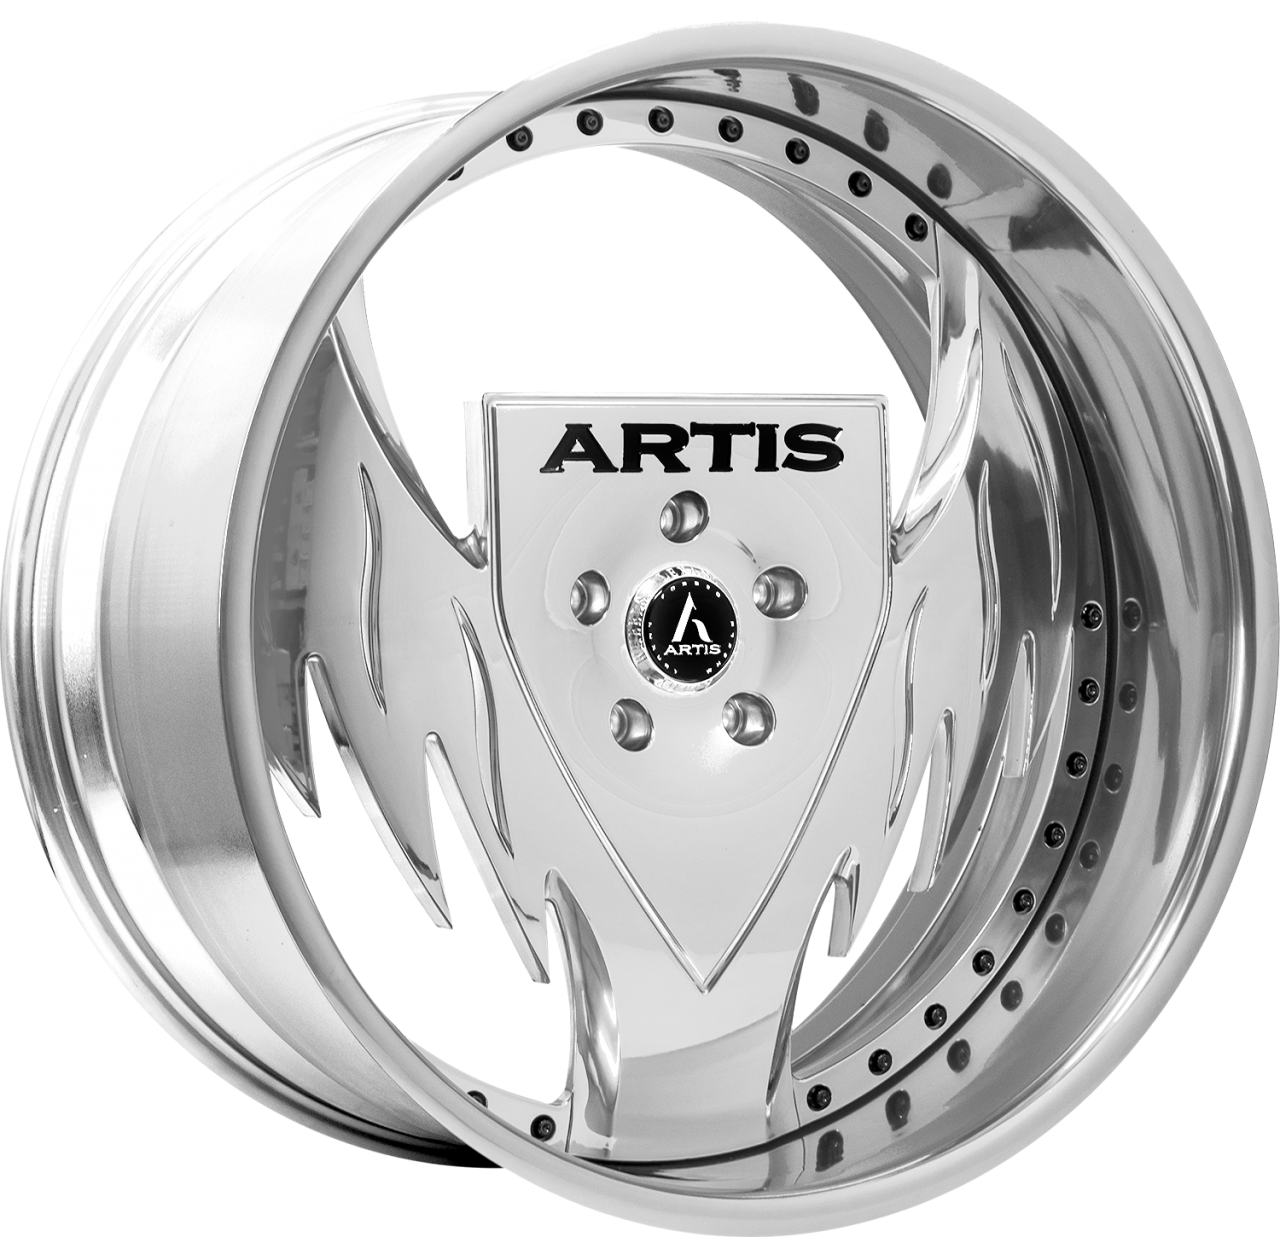 Artis Forged Batman wheel with Chrome finish